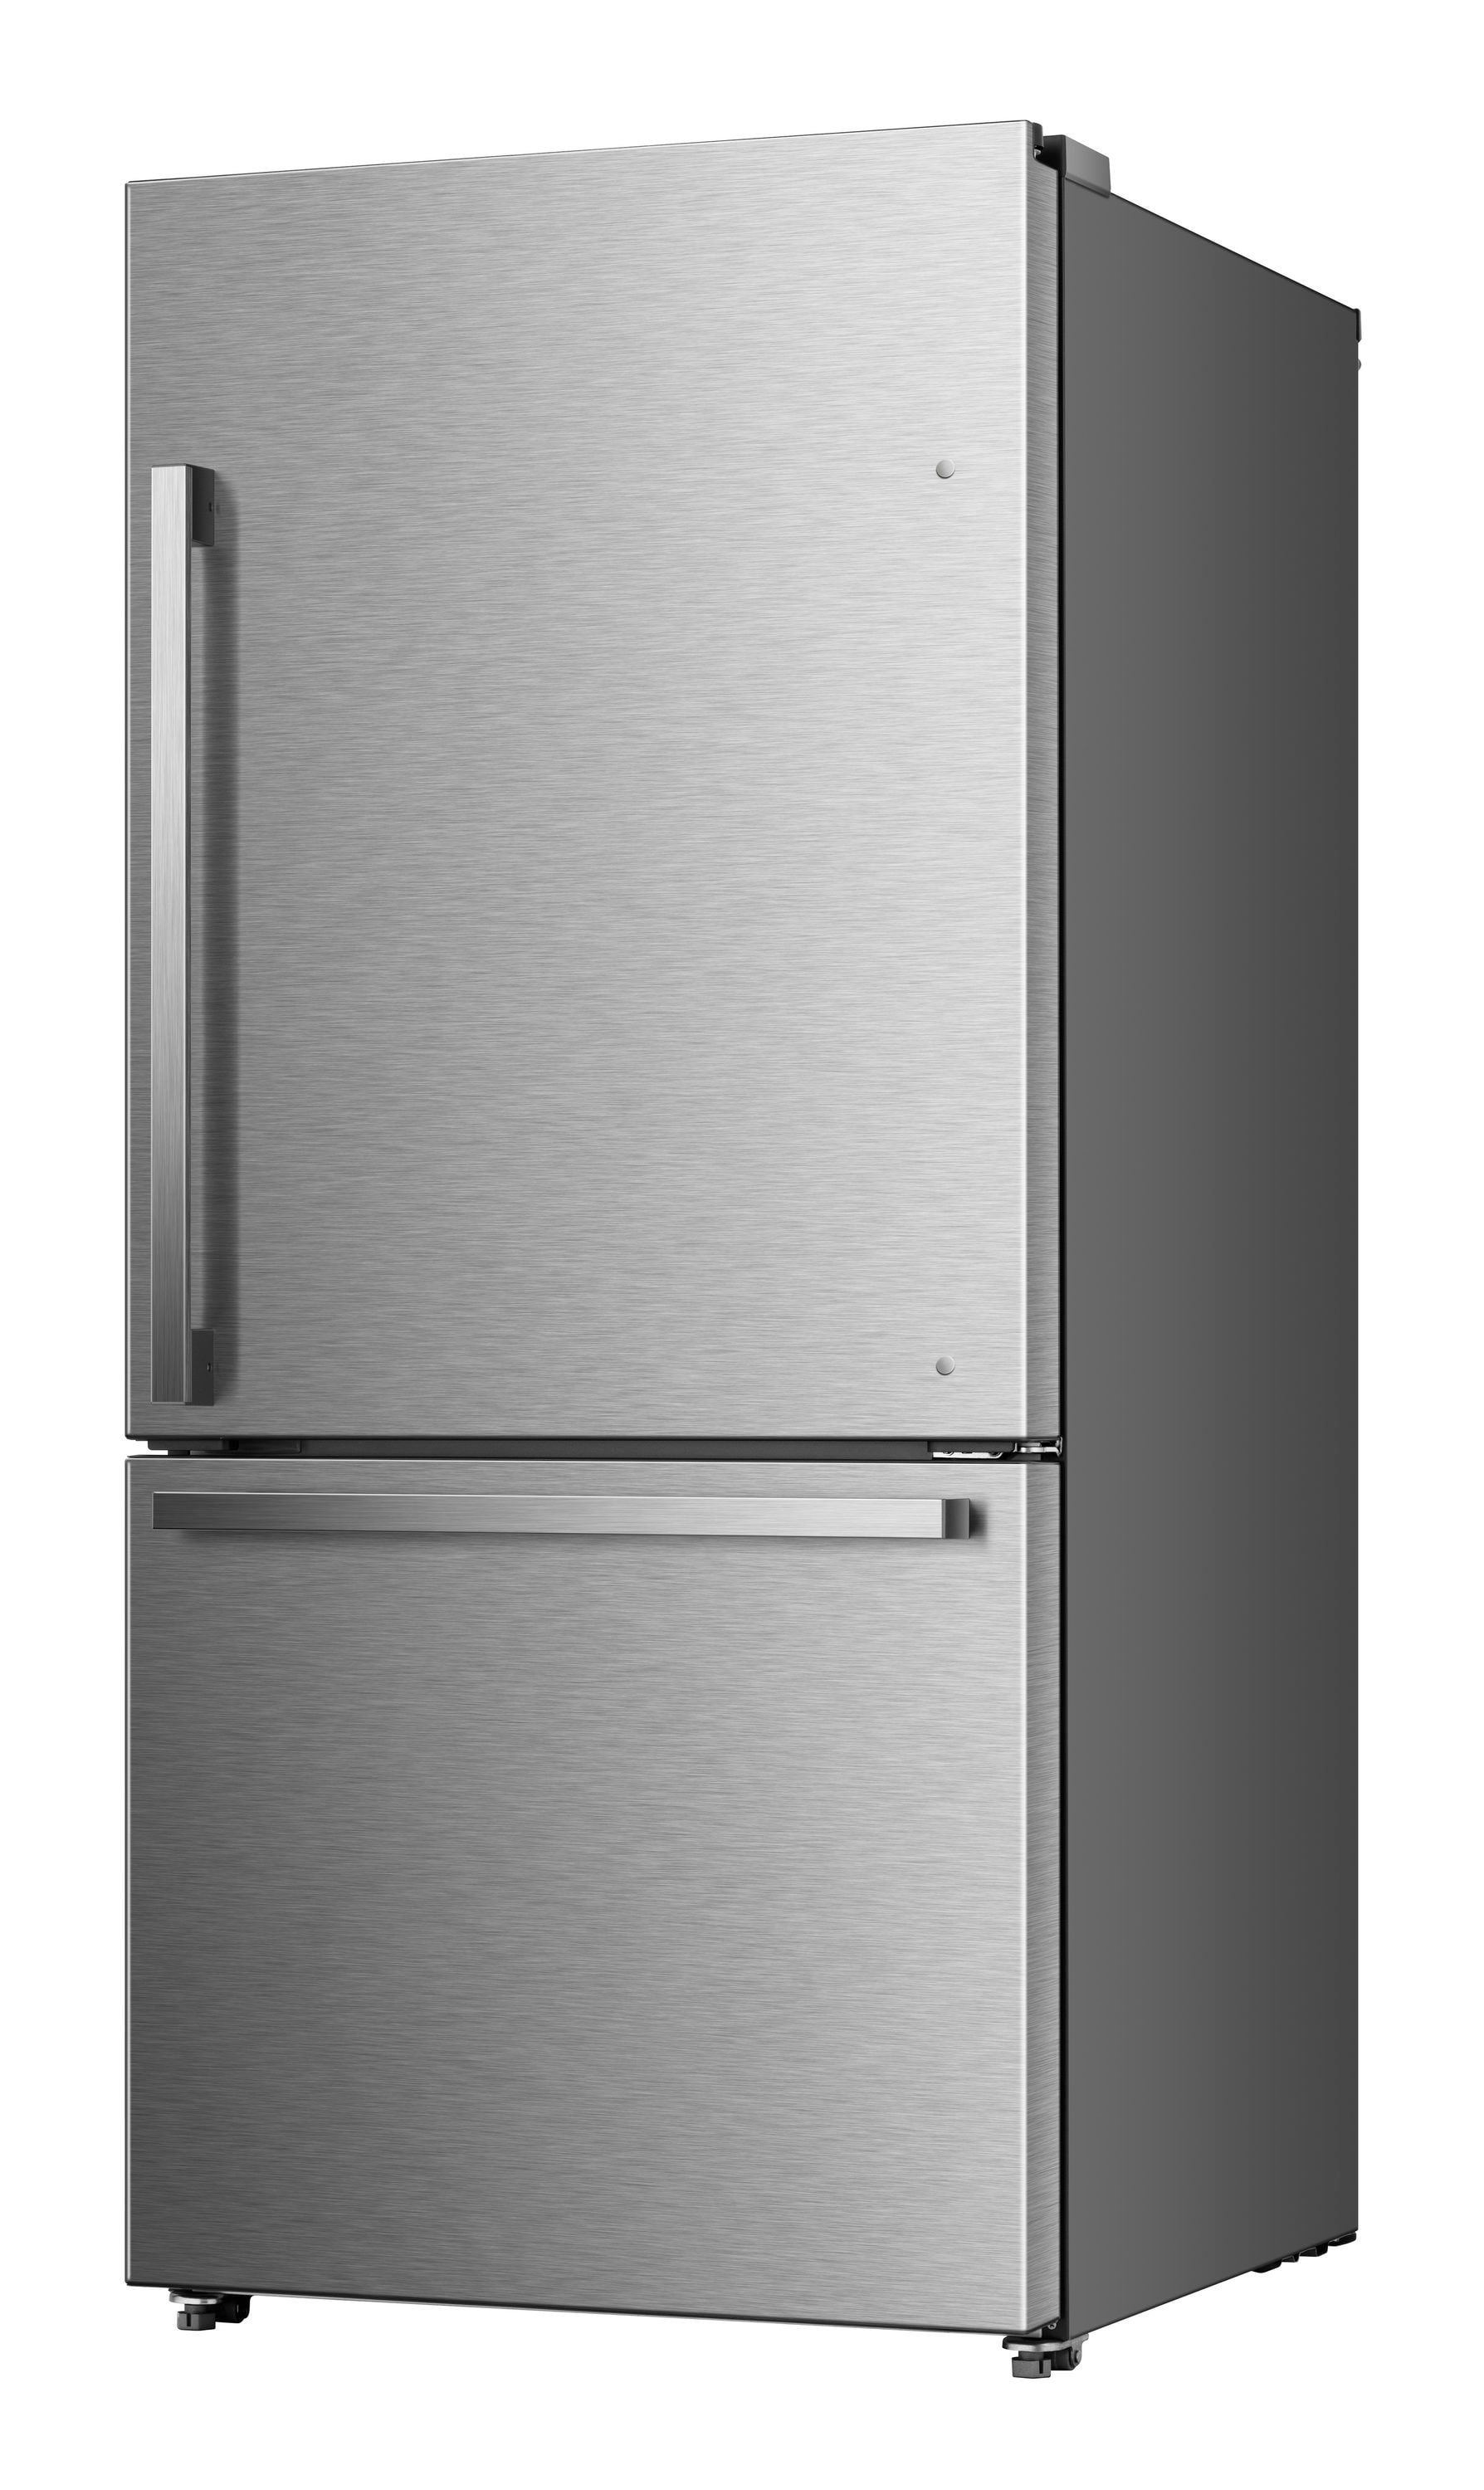 Hisense 20.9-cu ft Bottom-Freezer Refrigerator with Ice Maker 